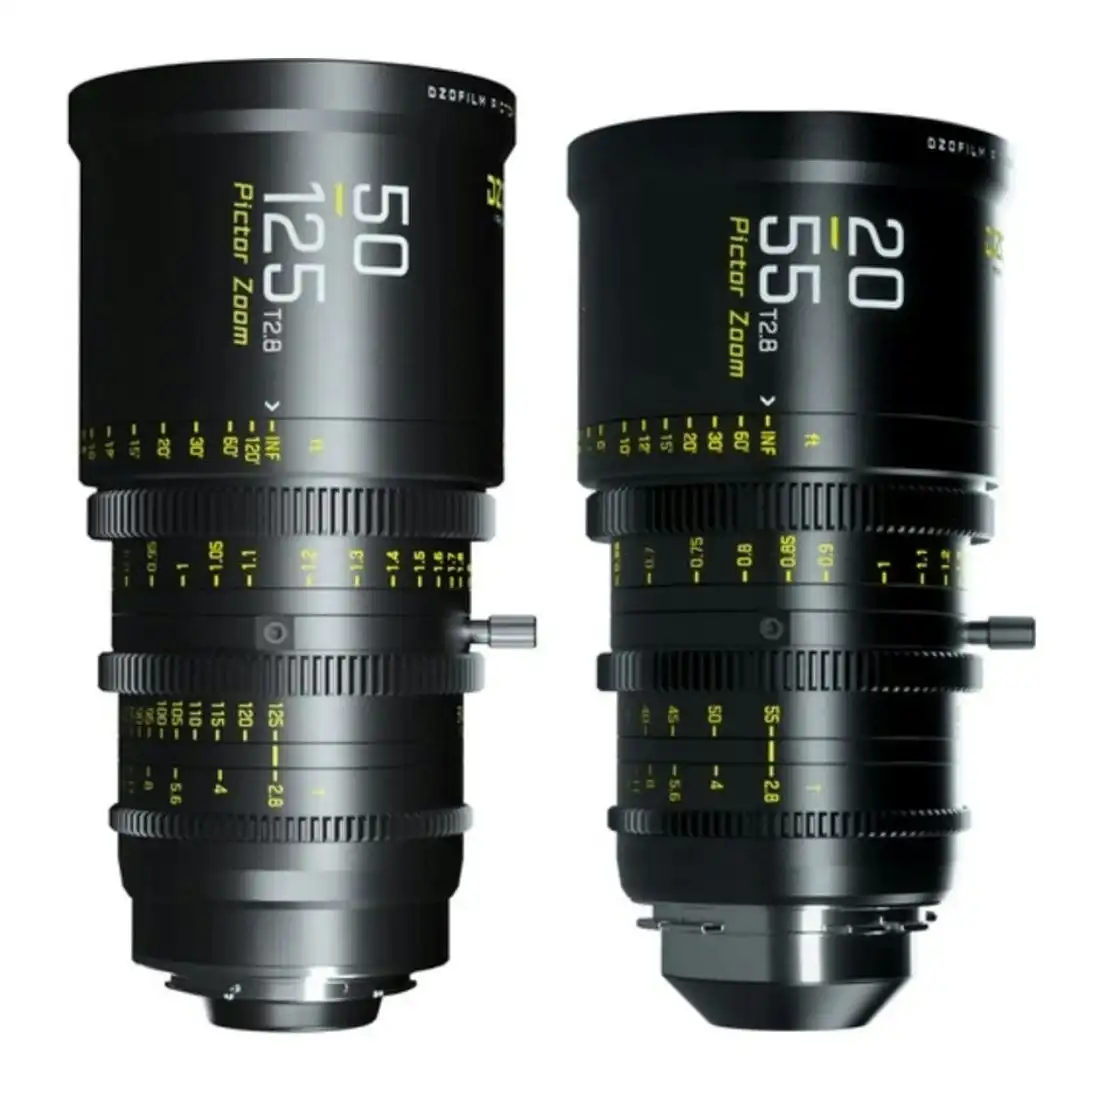 DZOFILM Pictor 20-55mm and 50-125mm T2.8 Super35 Zoom Lens Bundle (PL Mount and EF Mount) - Black